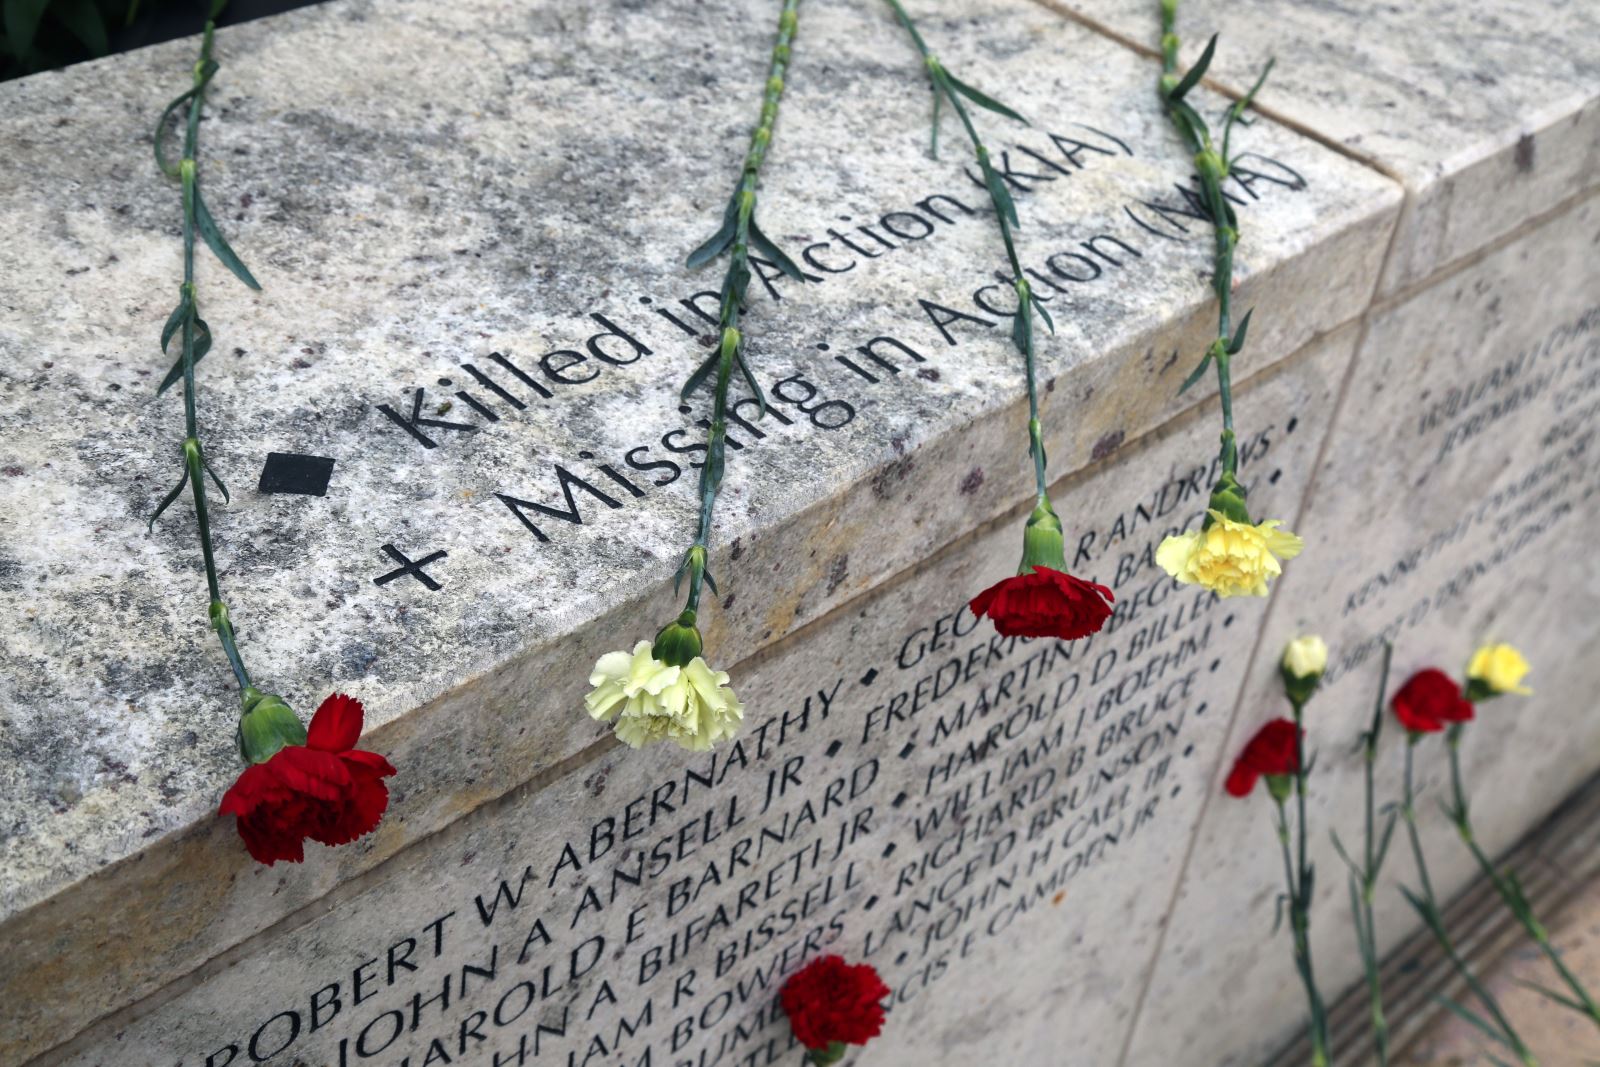 Vietnam Memorial, Killed in Action, Missing in Action